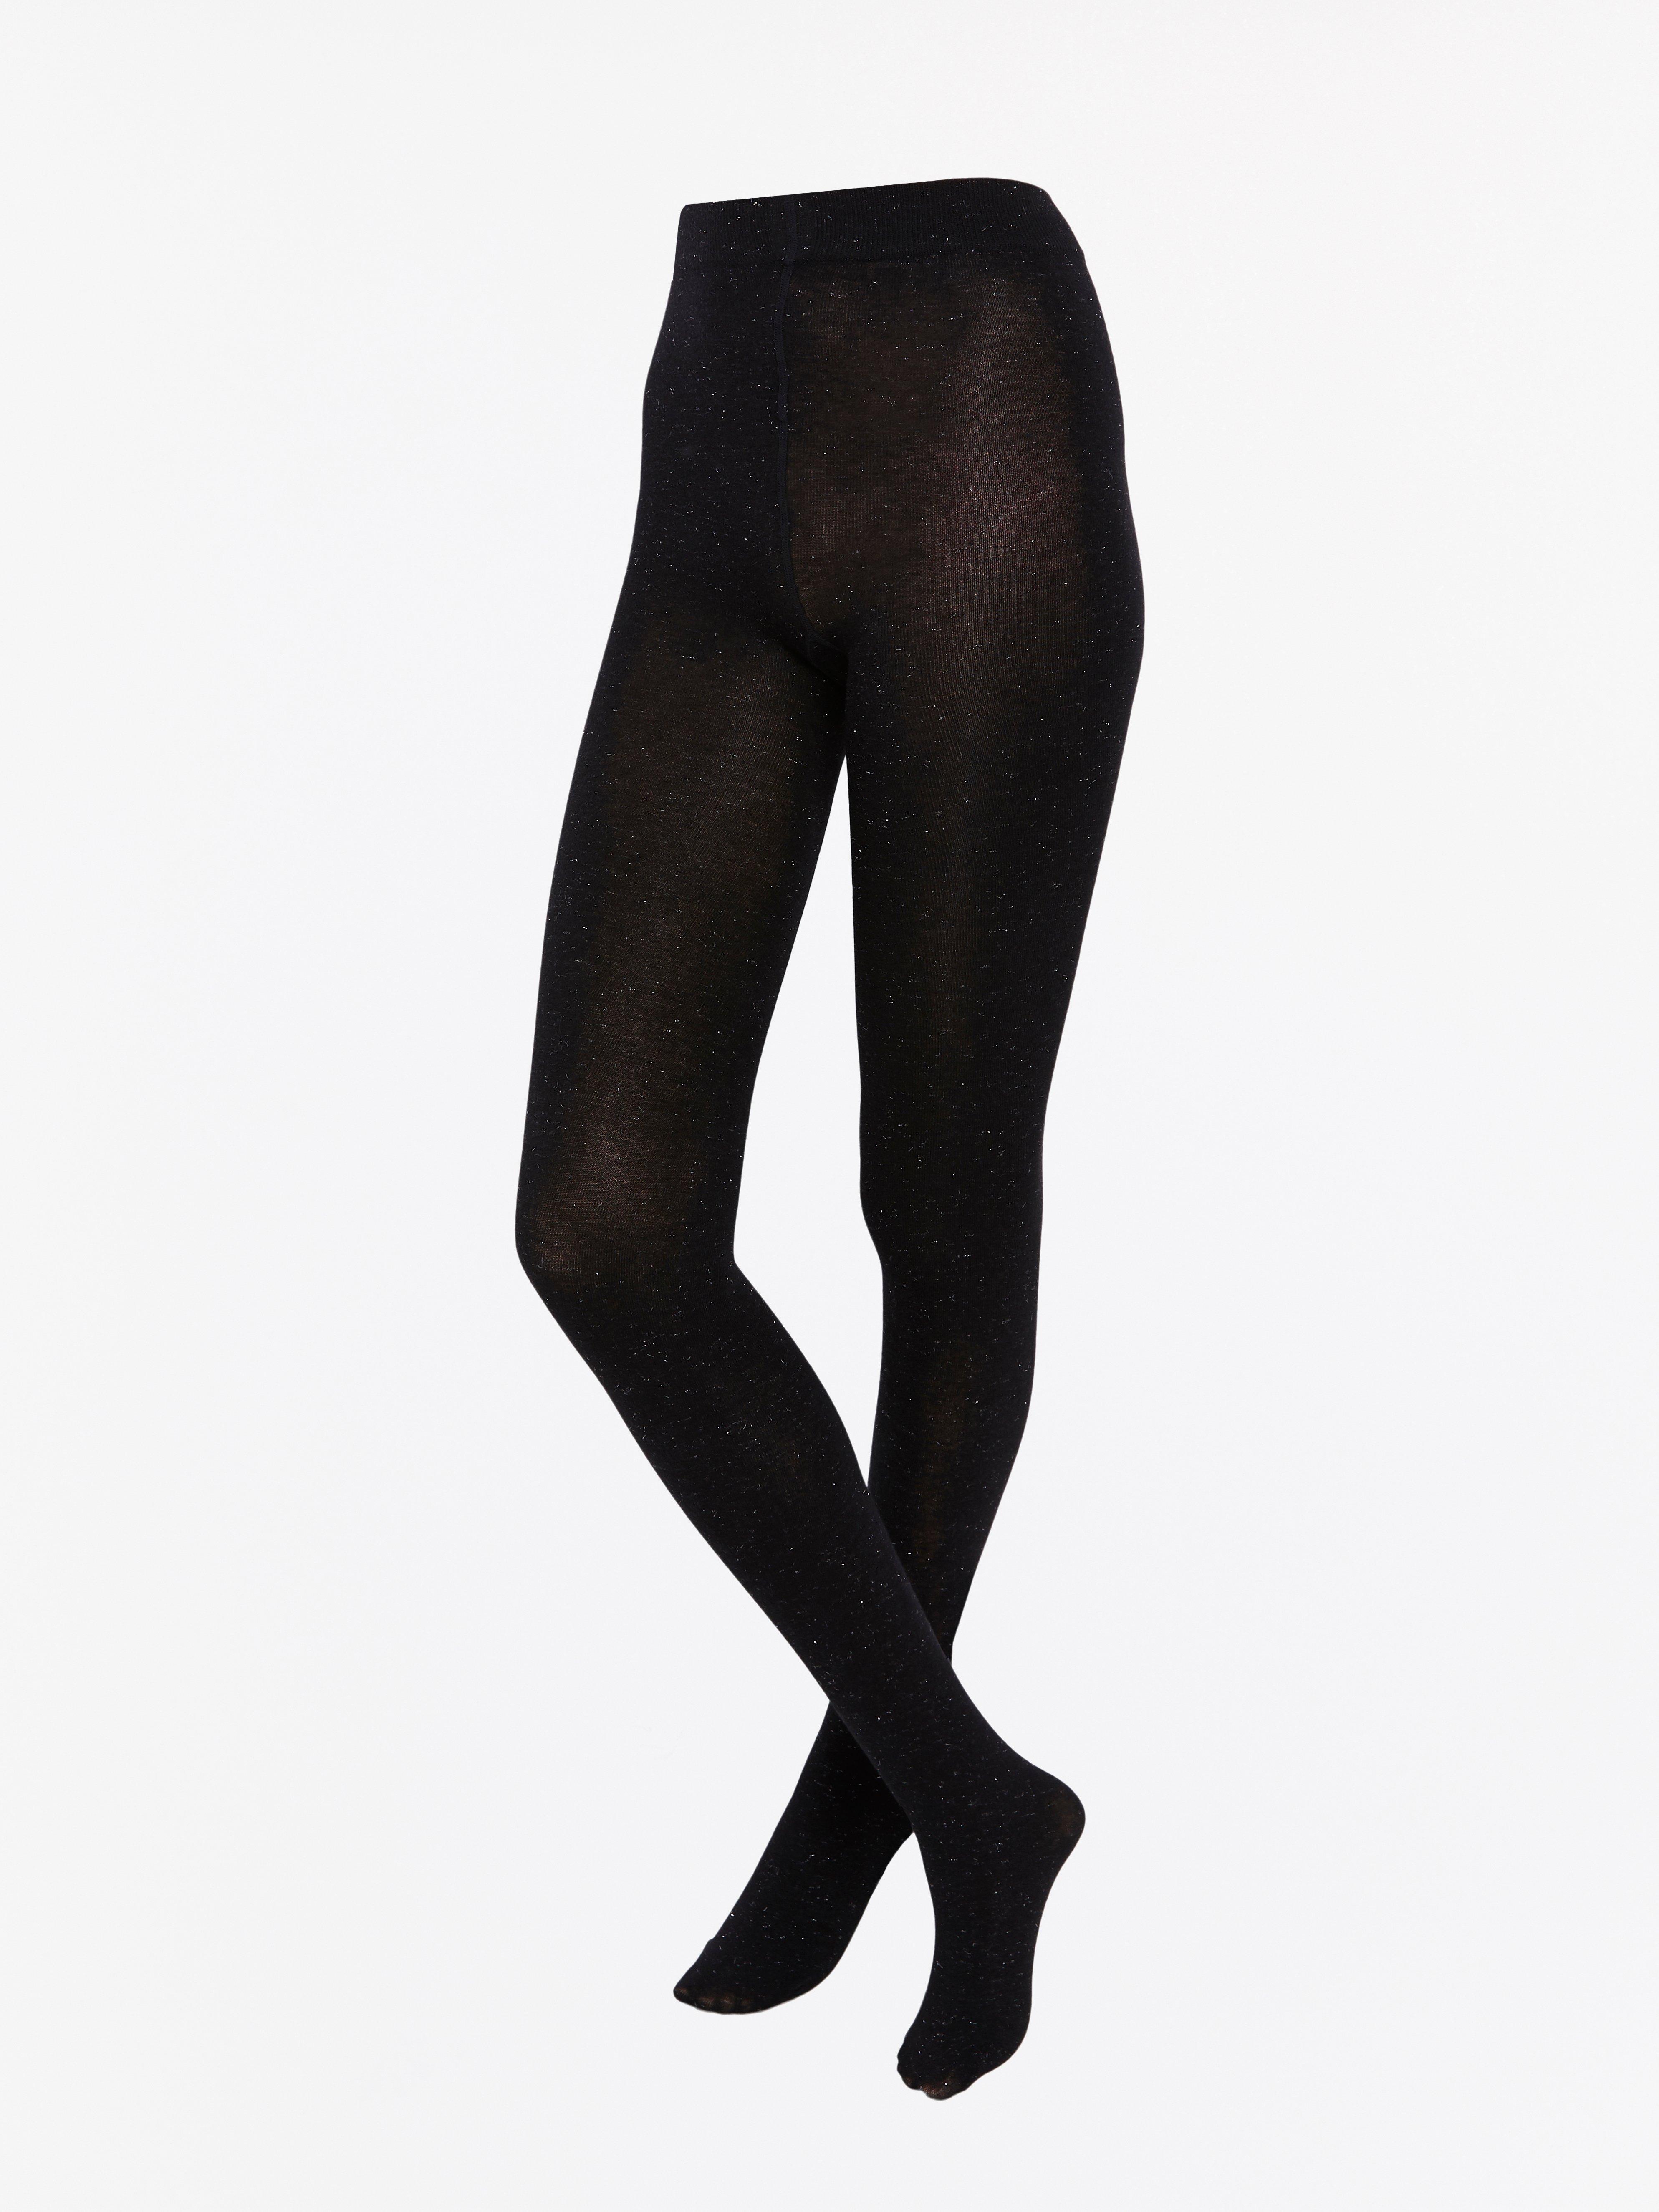 Black tights with lurex | Lindex Europe